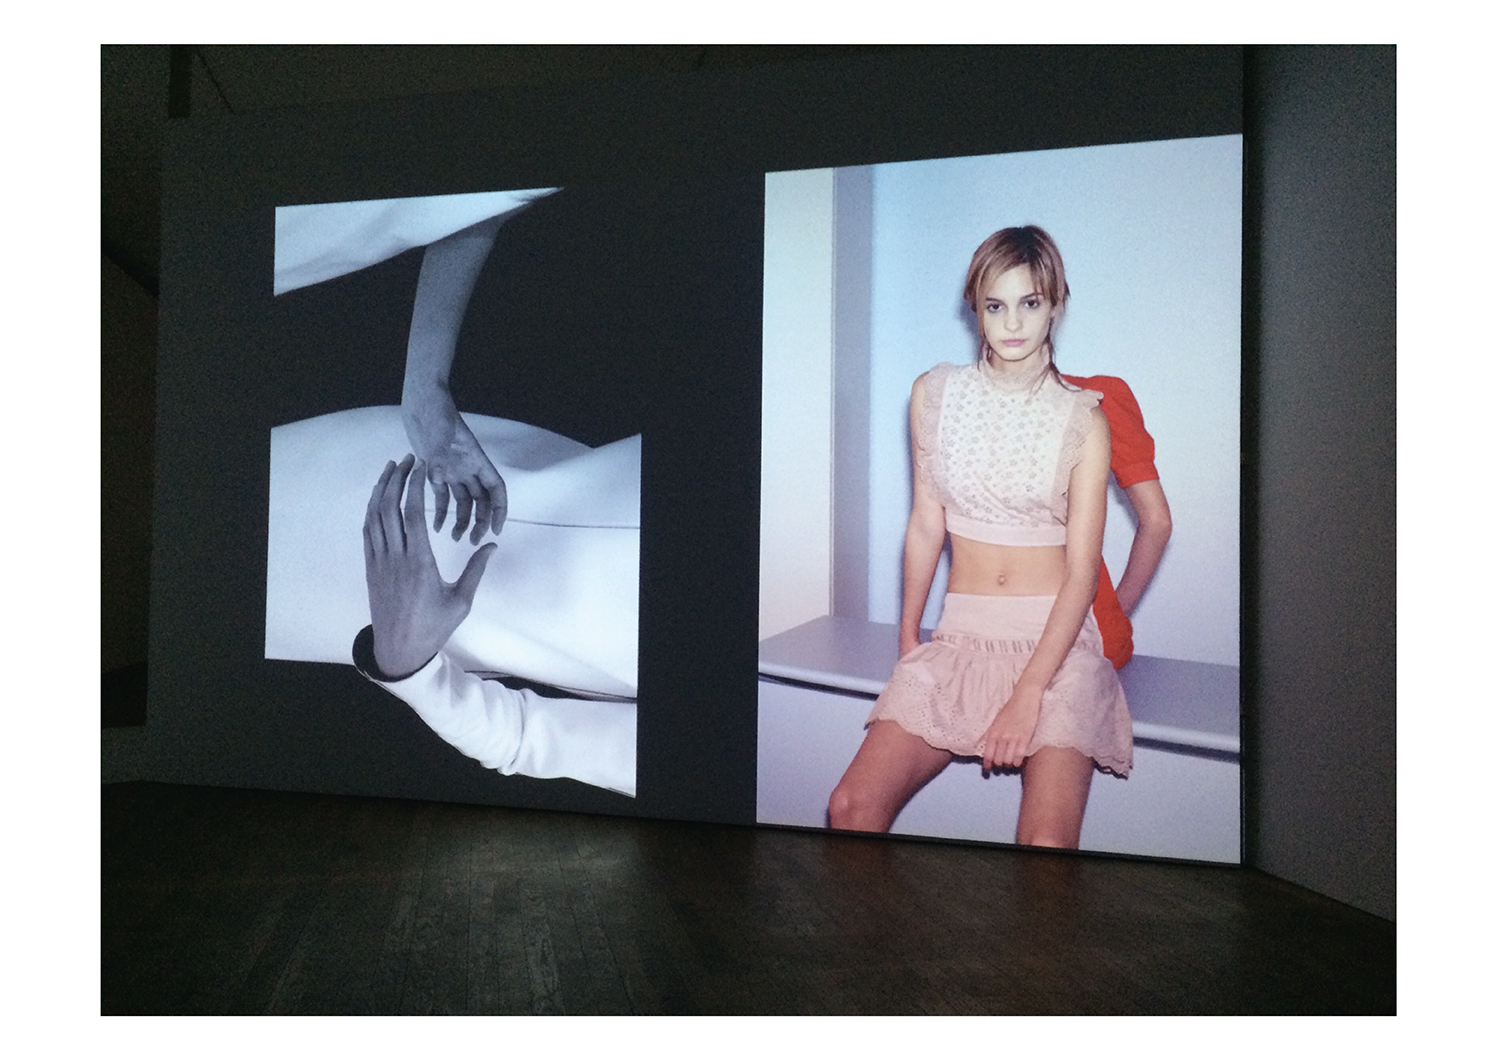 Viviane Sassen Analemma Exhibition at The Photographer's Gallery in London. 